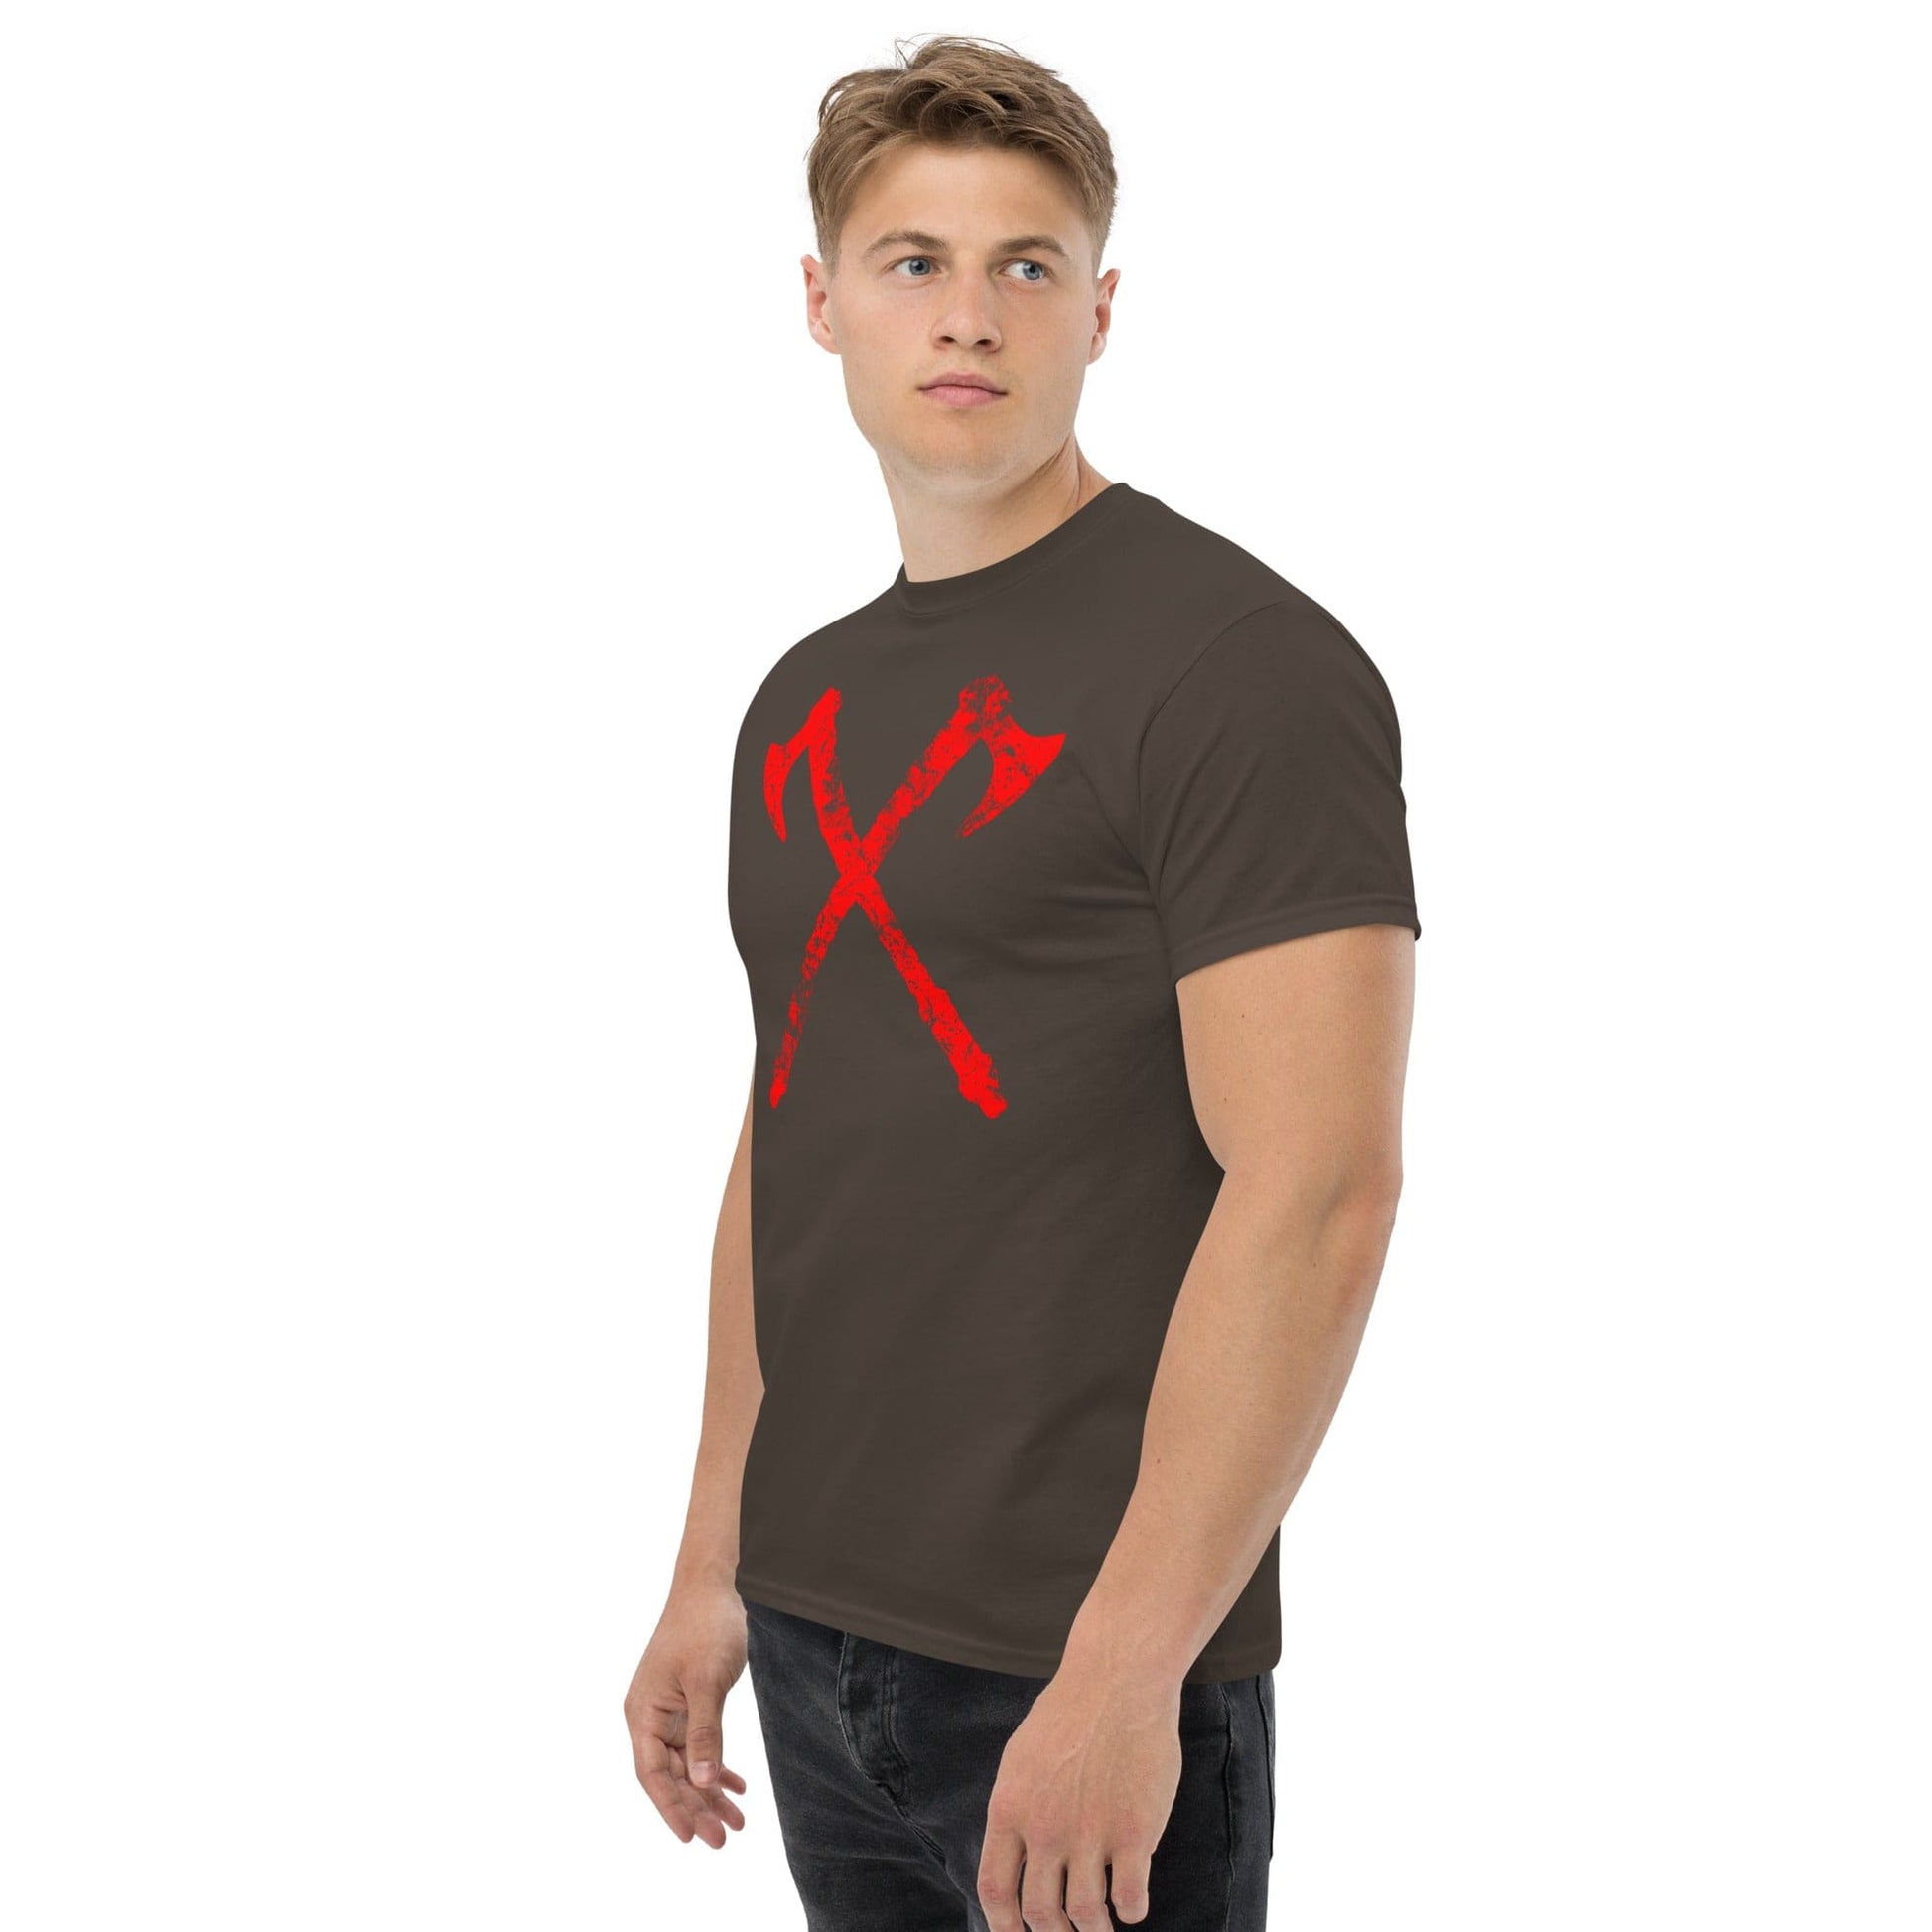 Bloody Viking Axes T-shirt